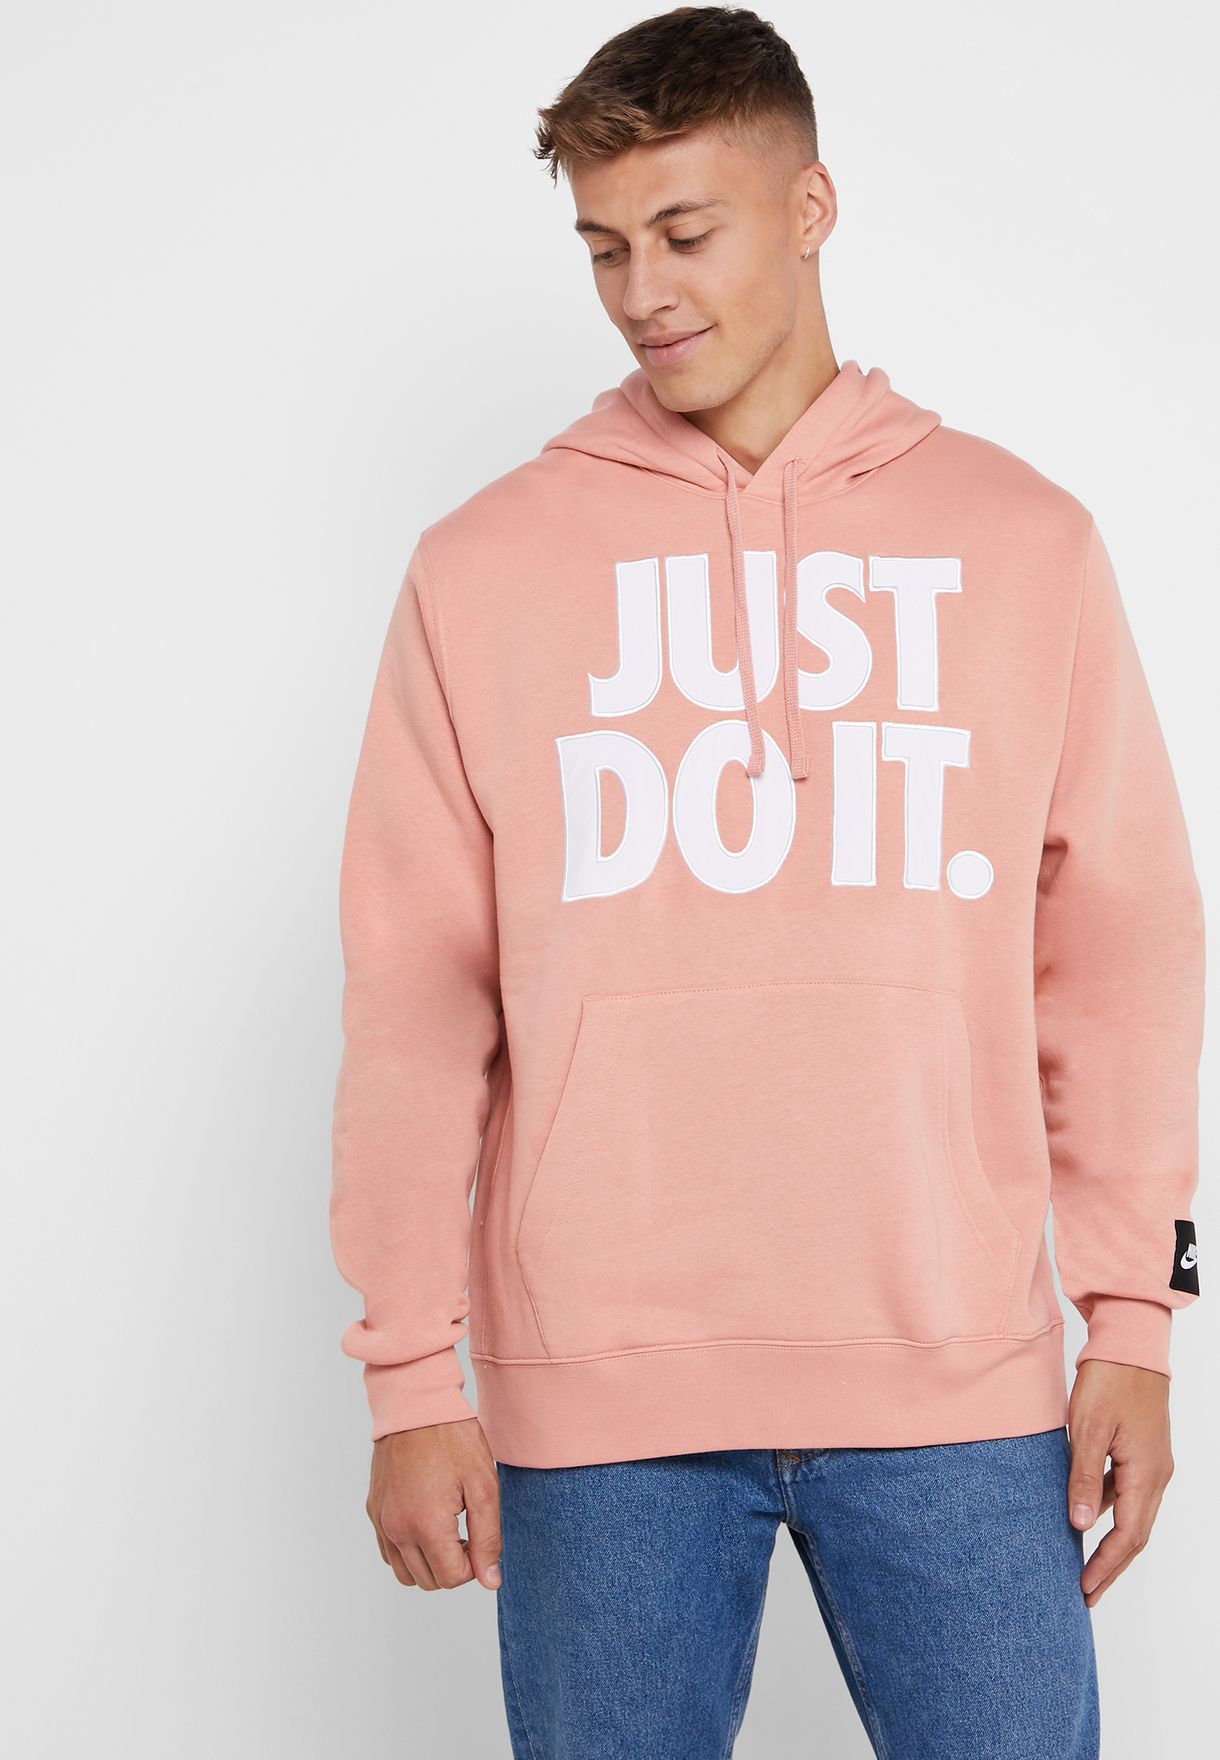 nike just do it hoodie pink